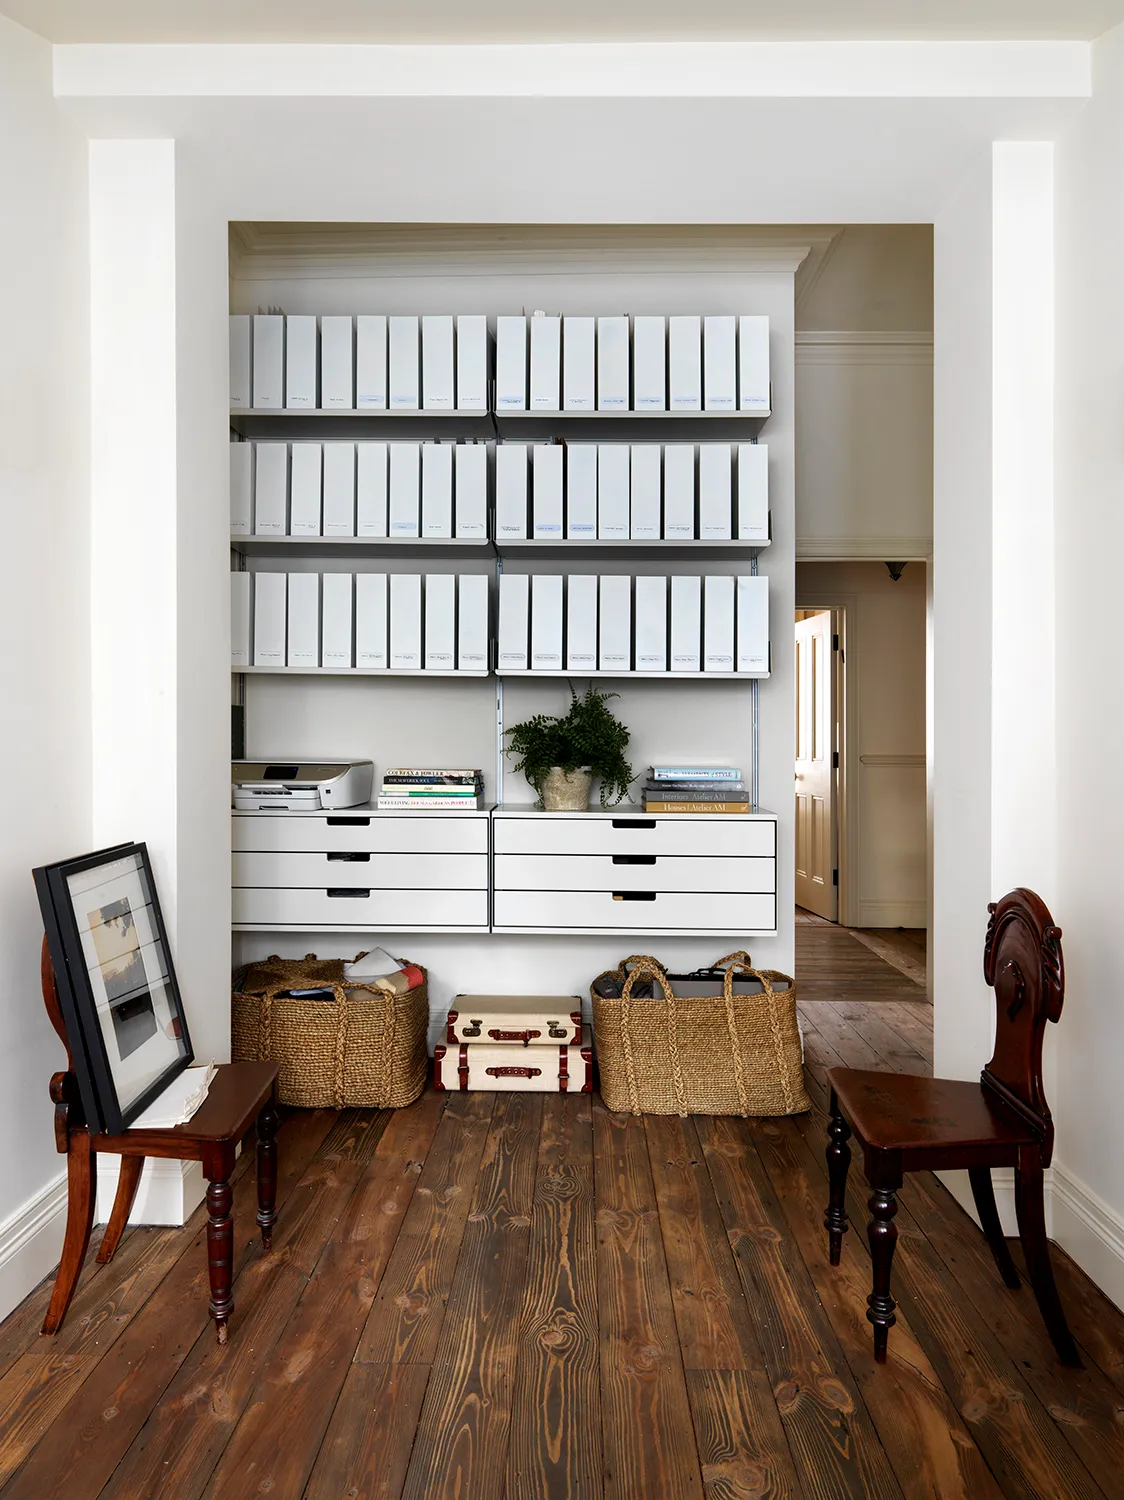 Décor Inspiration | At Home With: Interior Designer Kerri Lipsitz, London